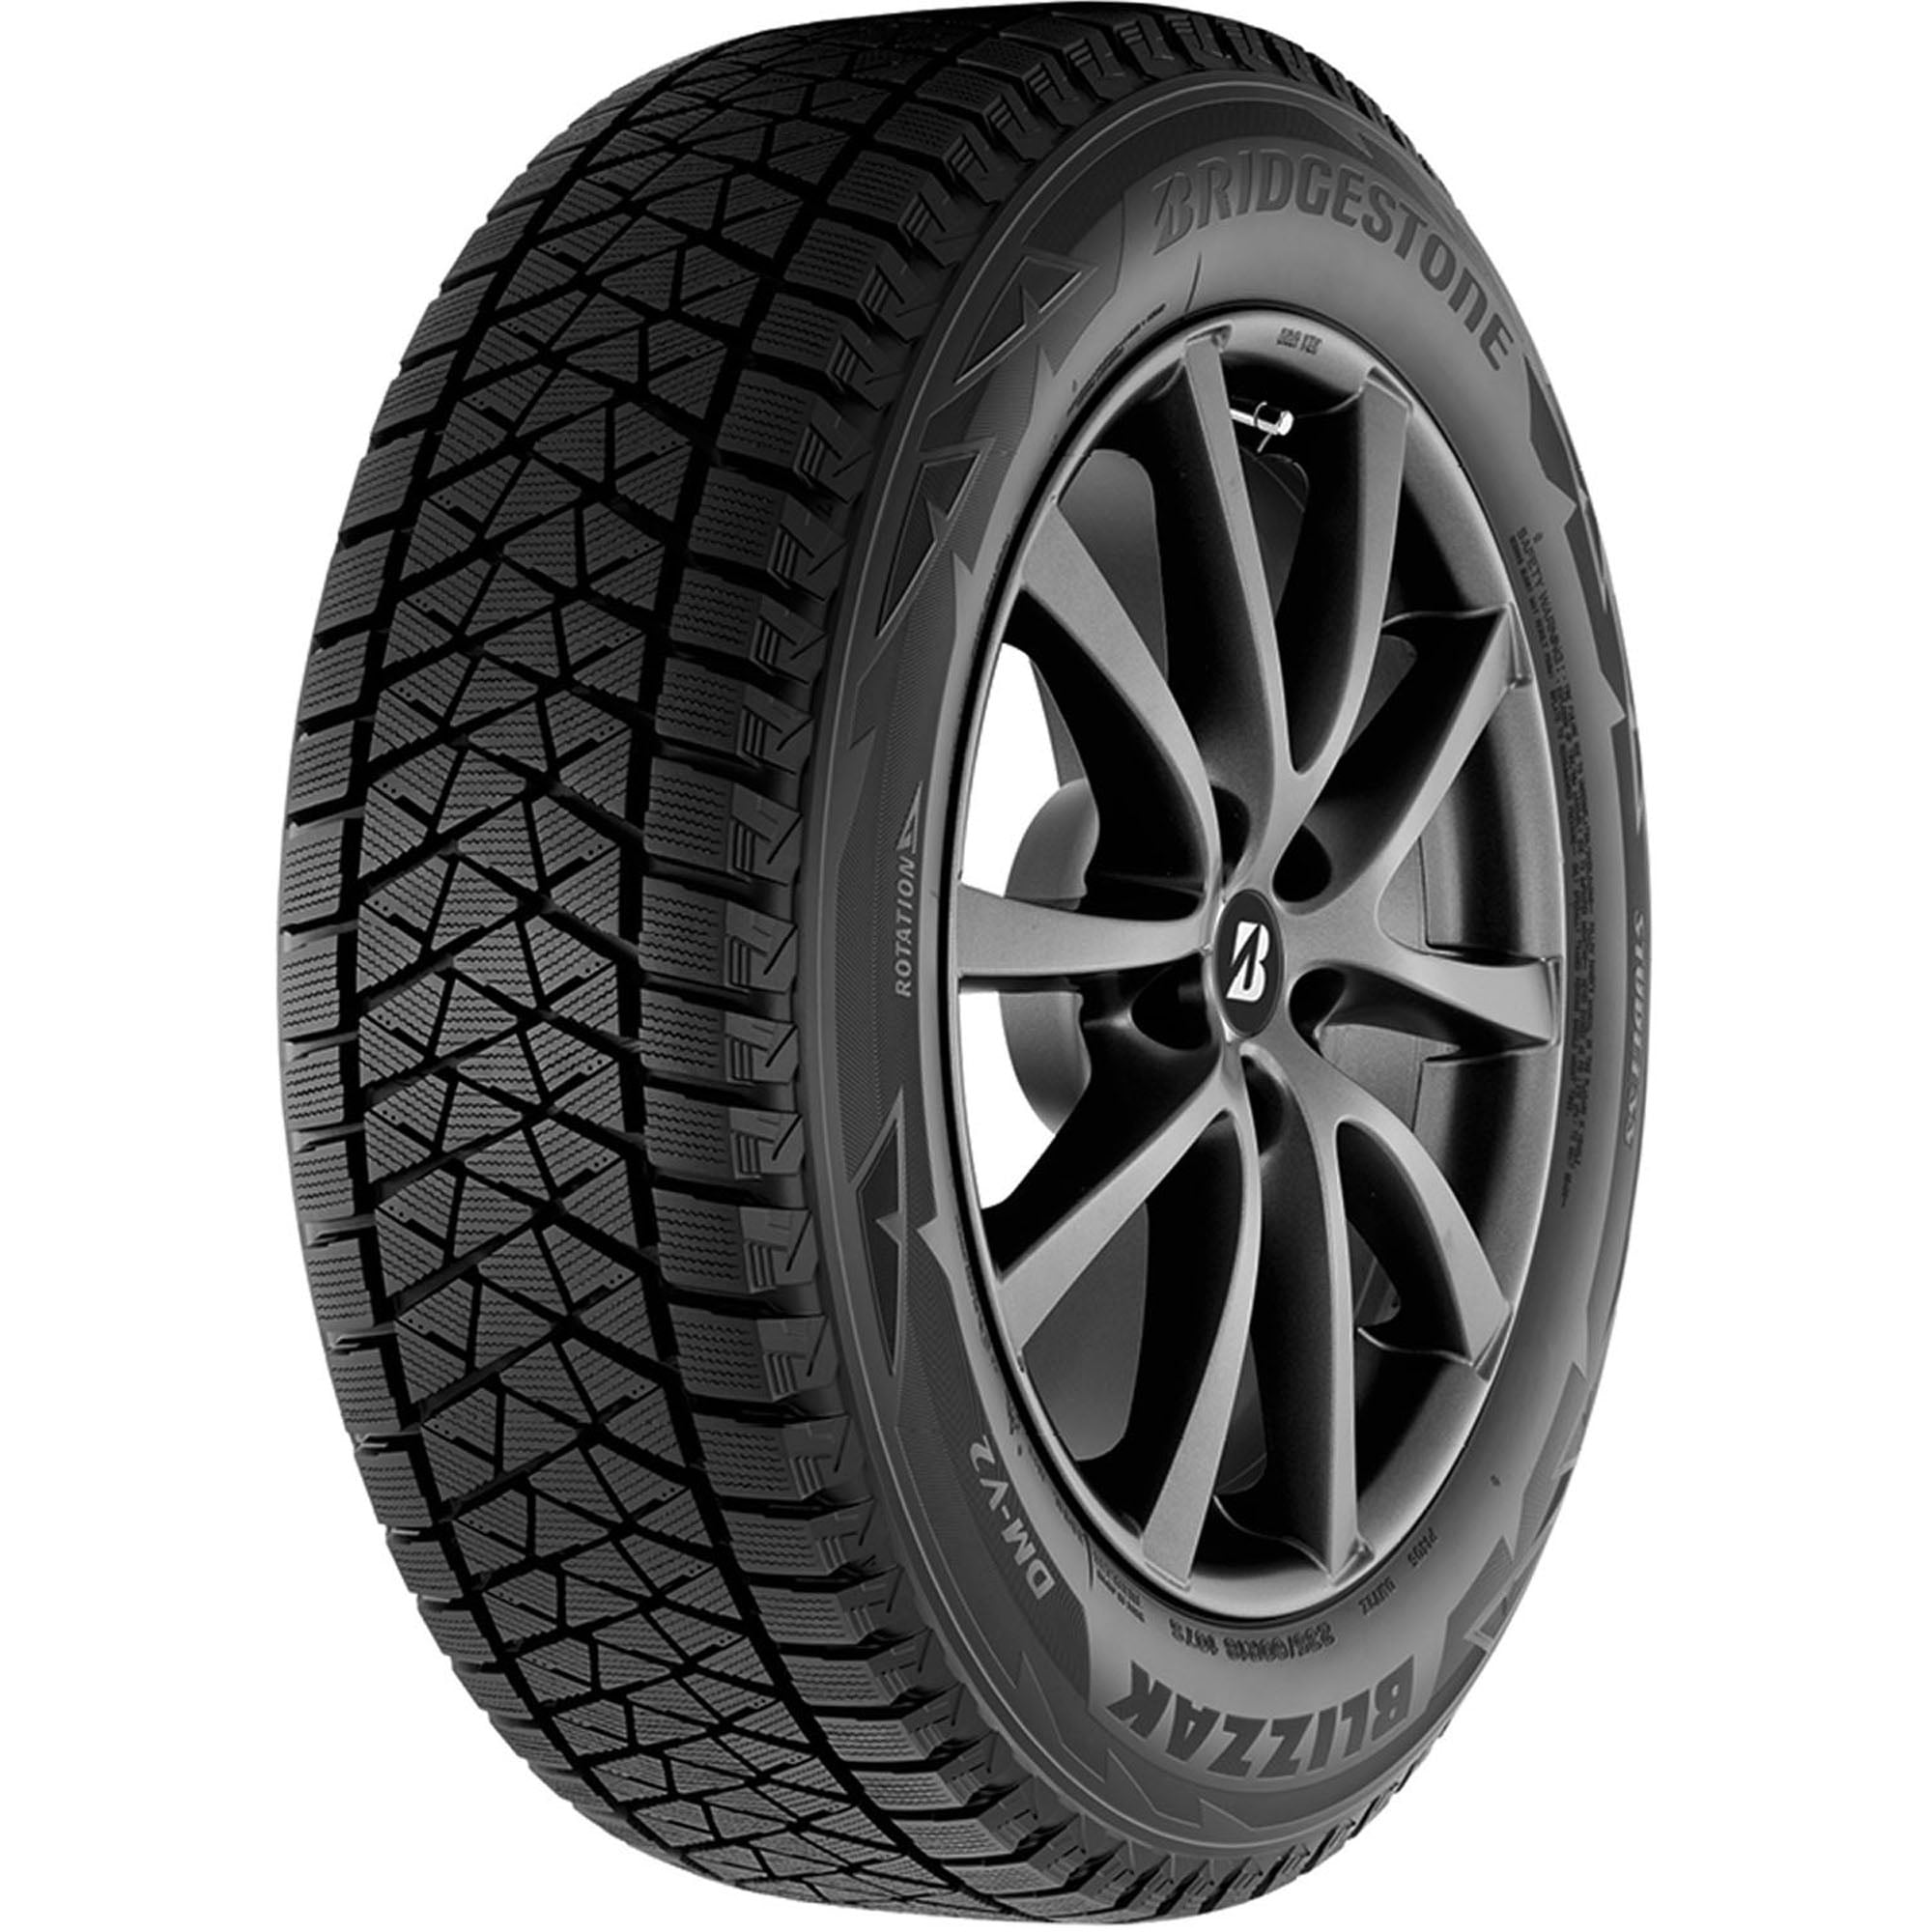 Bridgestone Blizzak DM-V2 Winter 265/65R17 112R Light Truck Tire